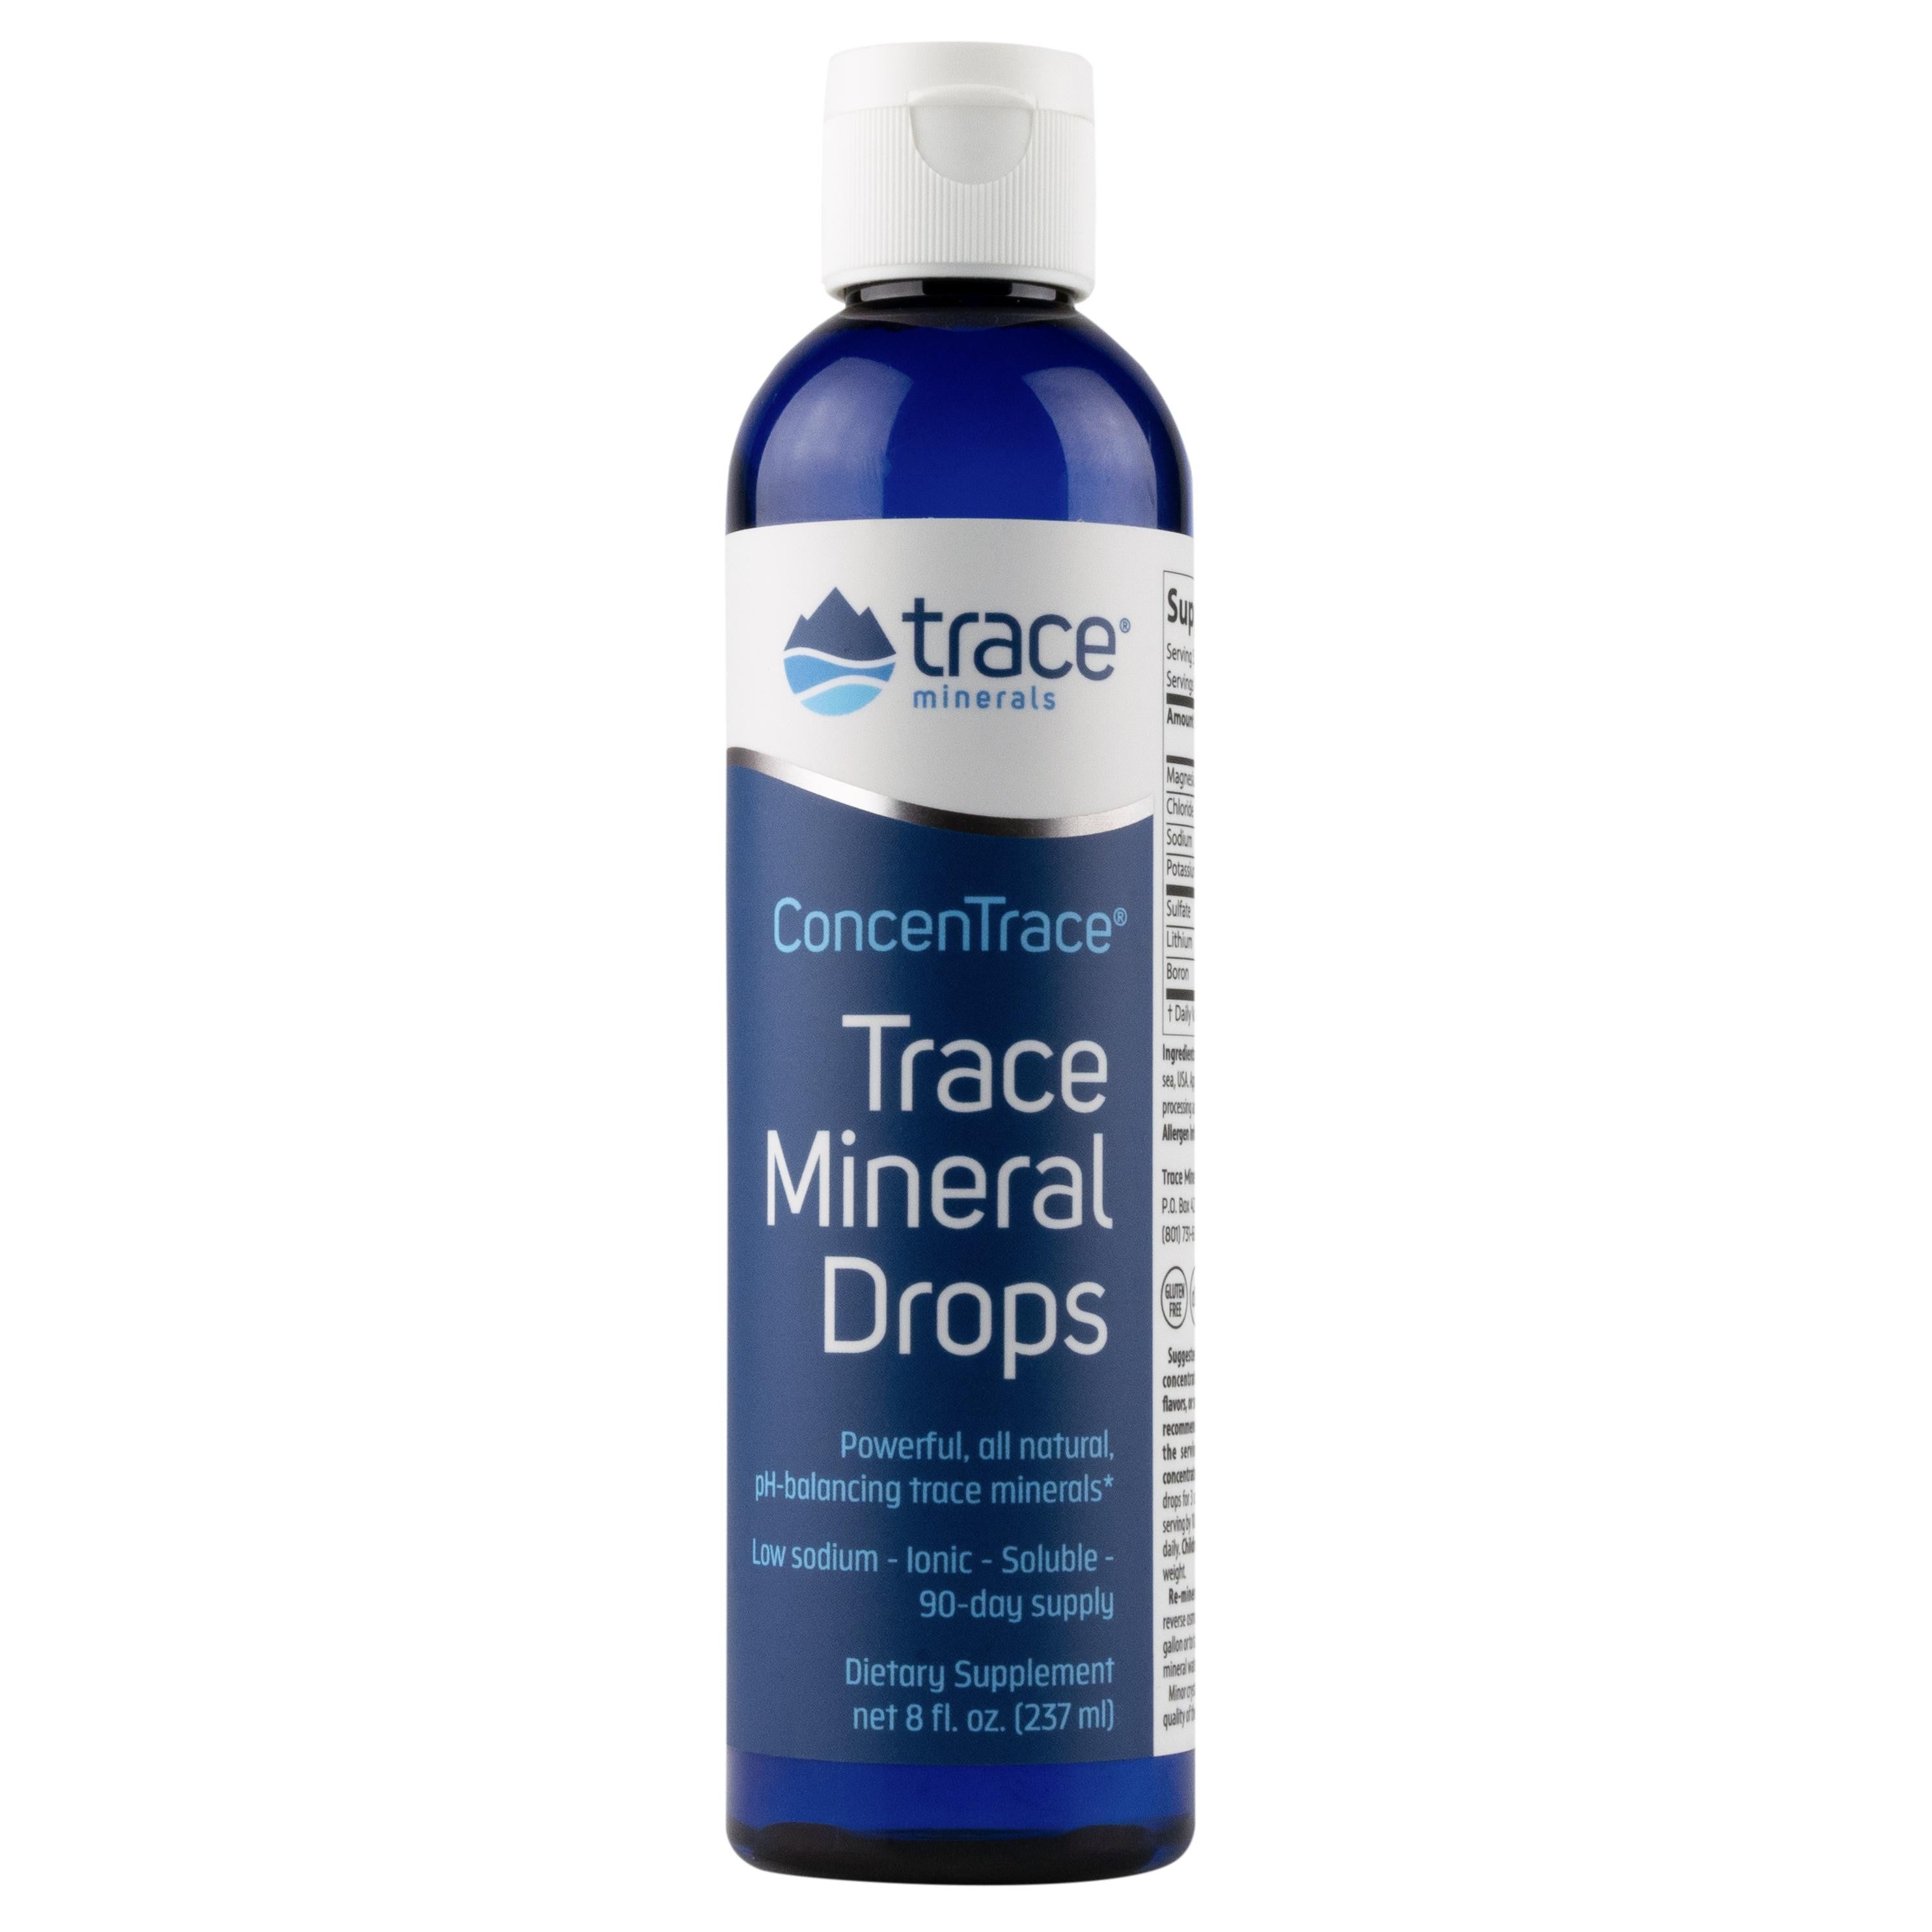 ConcenTrace Trace Mineral Drops - 236ml | Trace Minerals Research